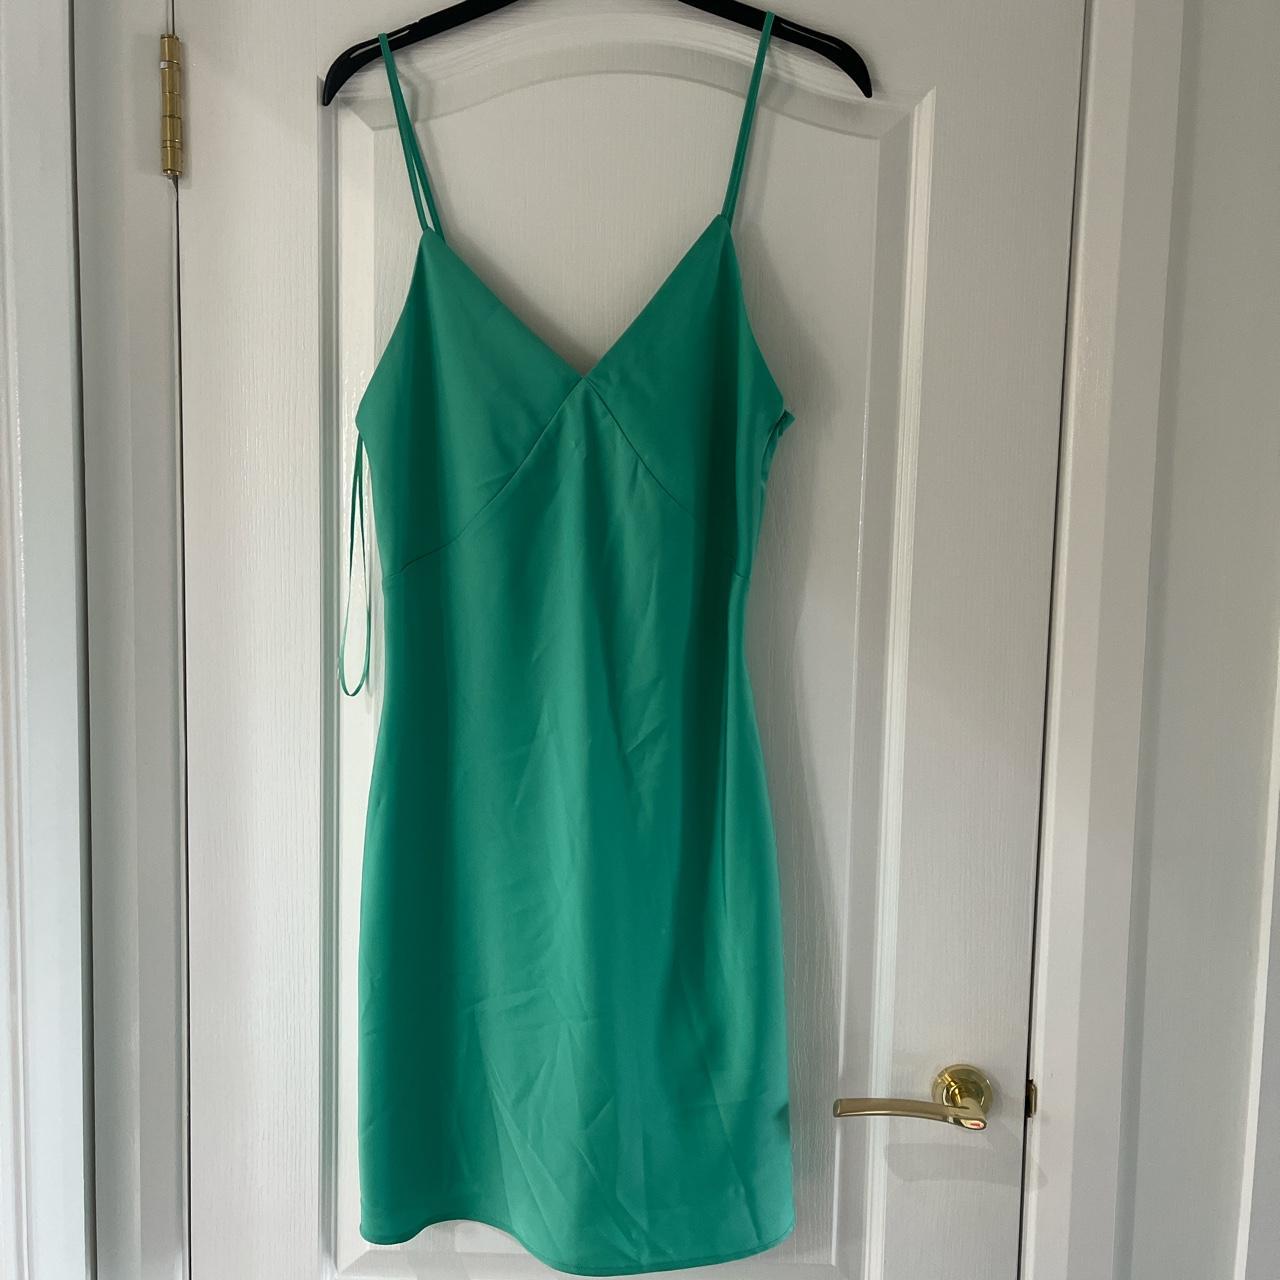 Emerald green primark slip dress. Size 14, would... - Depop